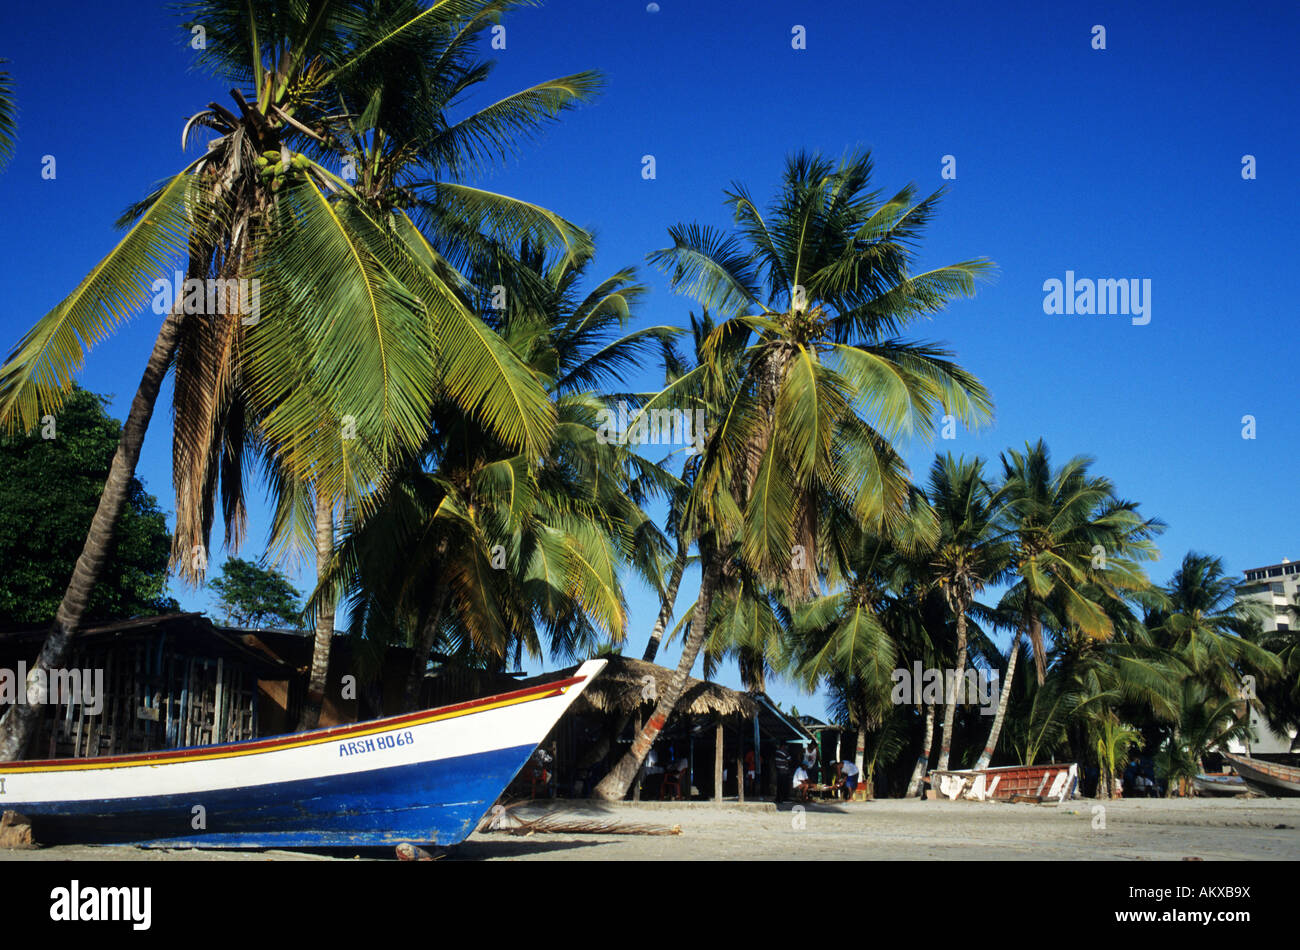 Venezuela, Nueva Esparta State, Margarita Island, Pampatar, fishing boat on the beach Stock Photo